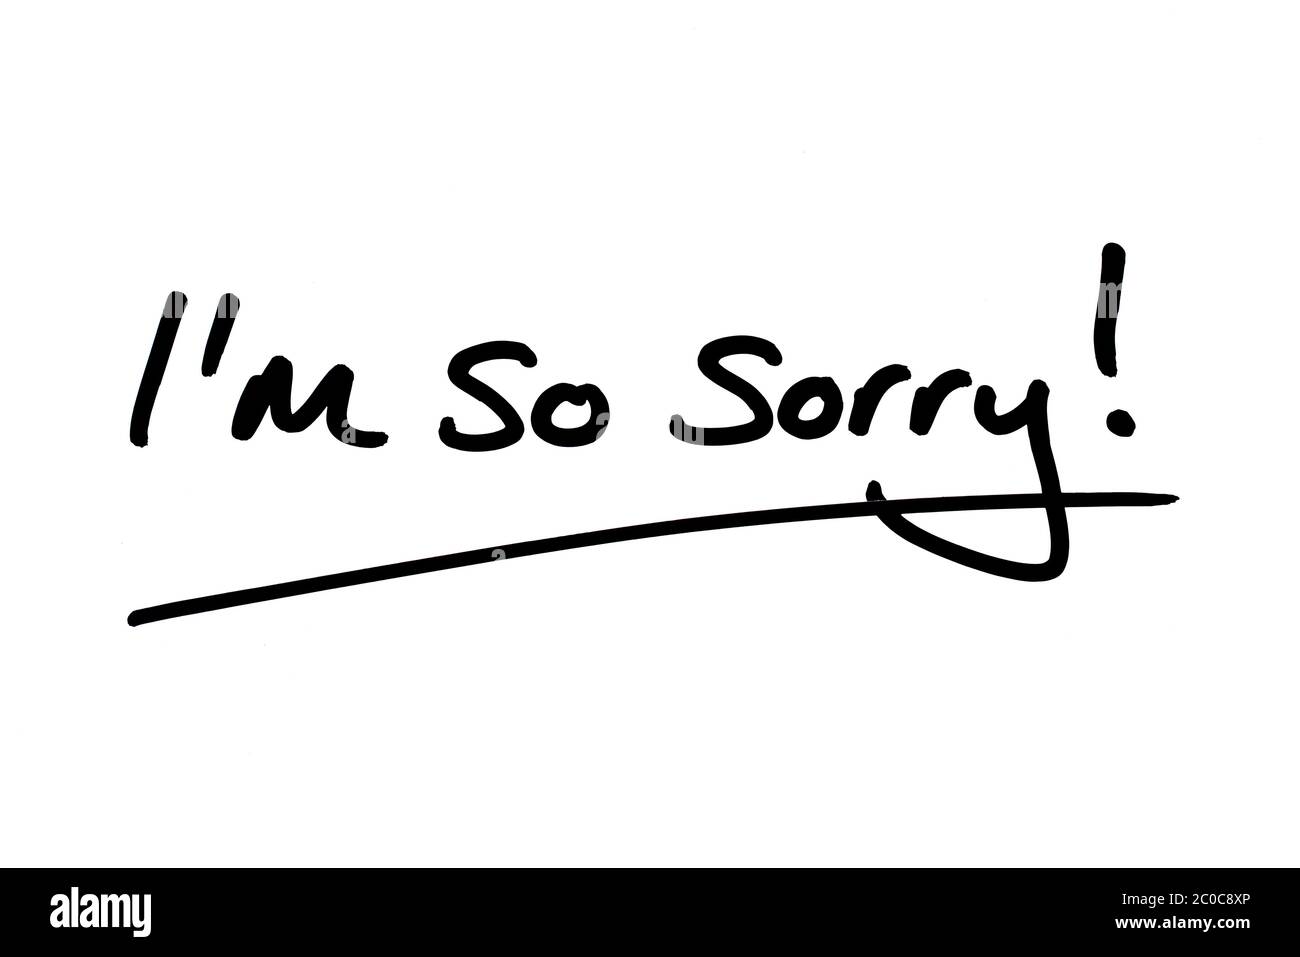 I’m so sorry! handwritten on a white background. Stock Photo